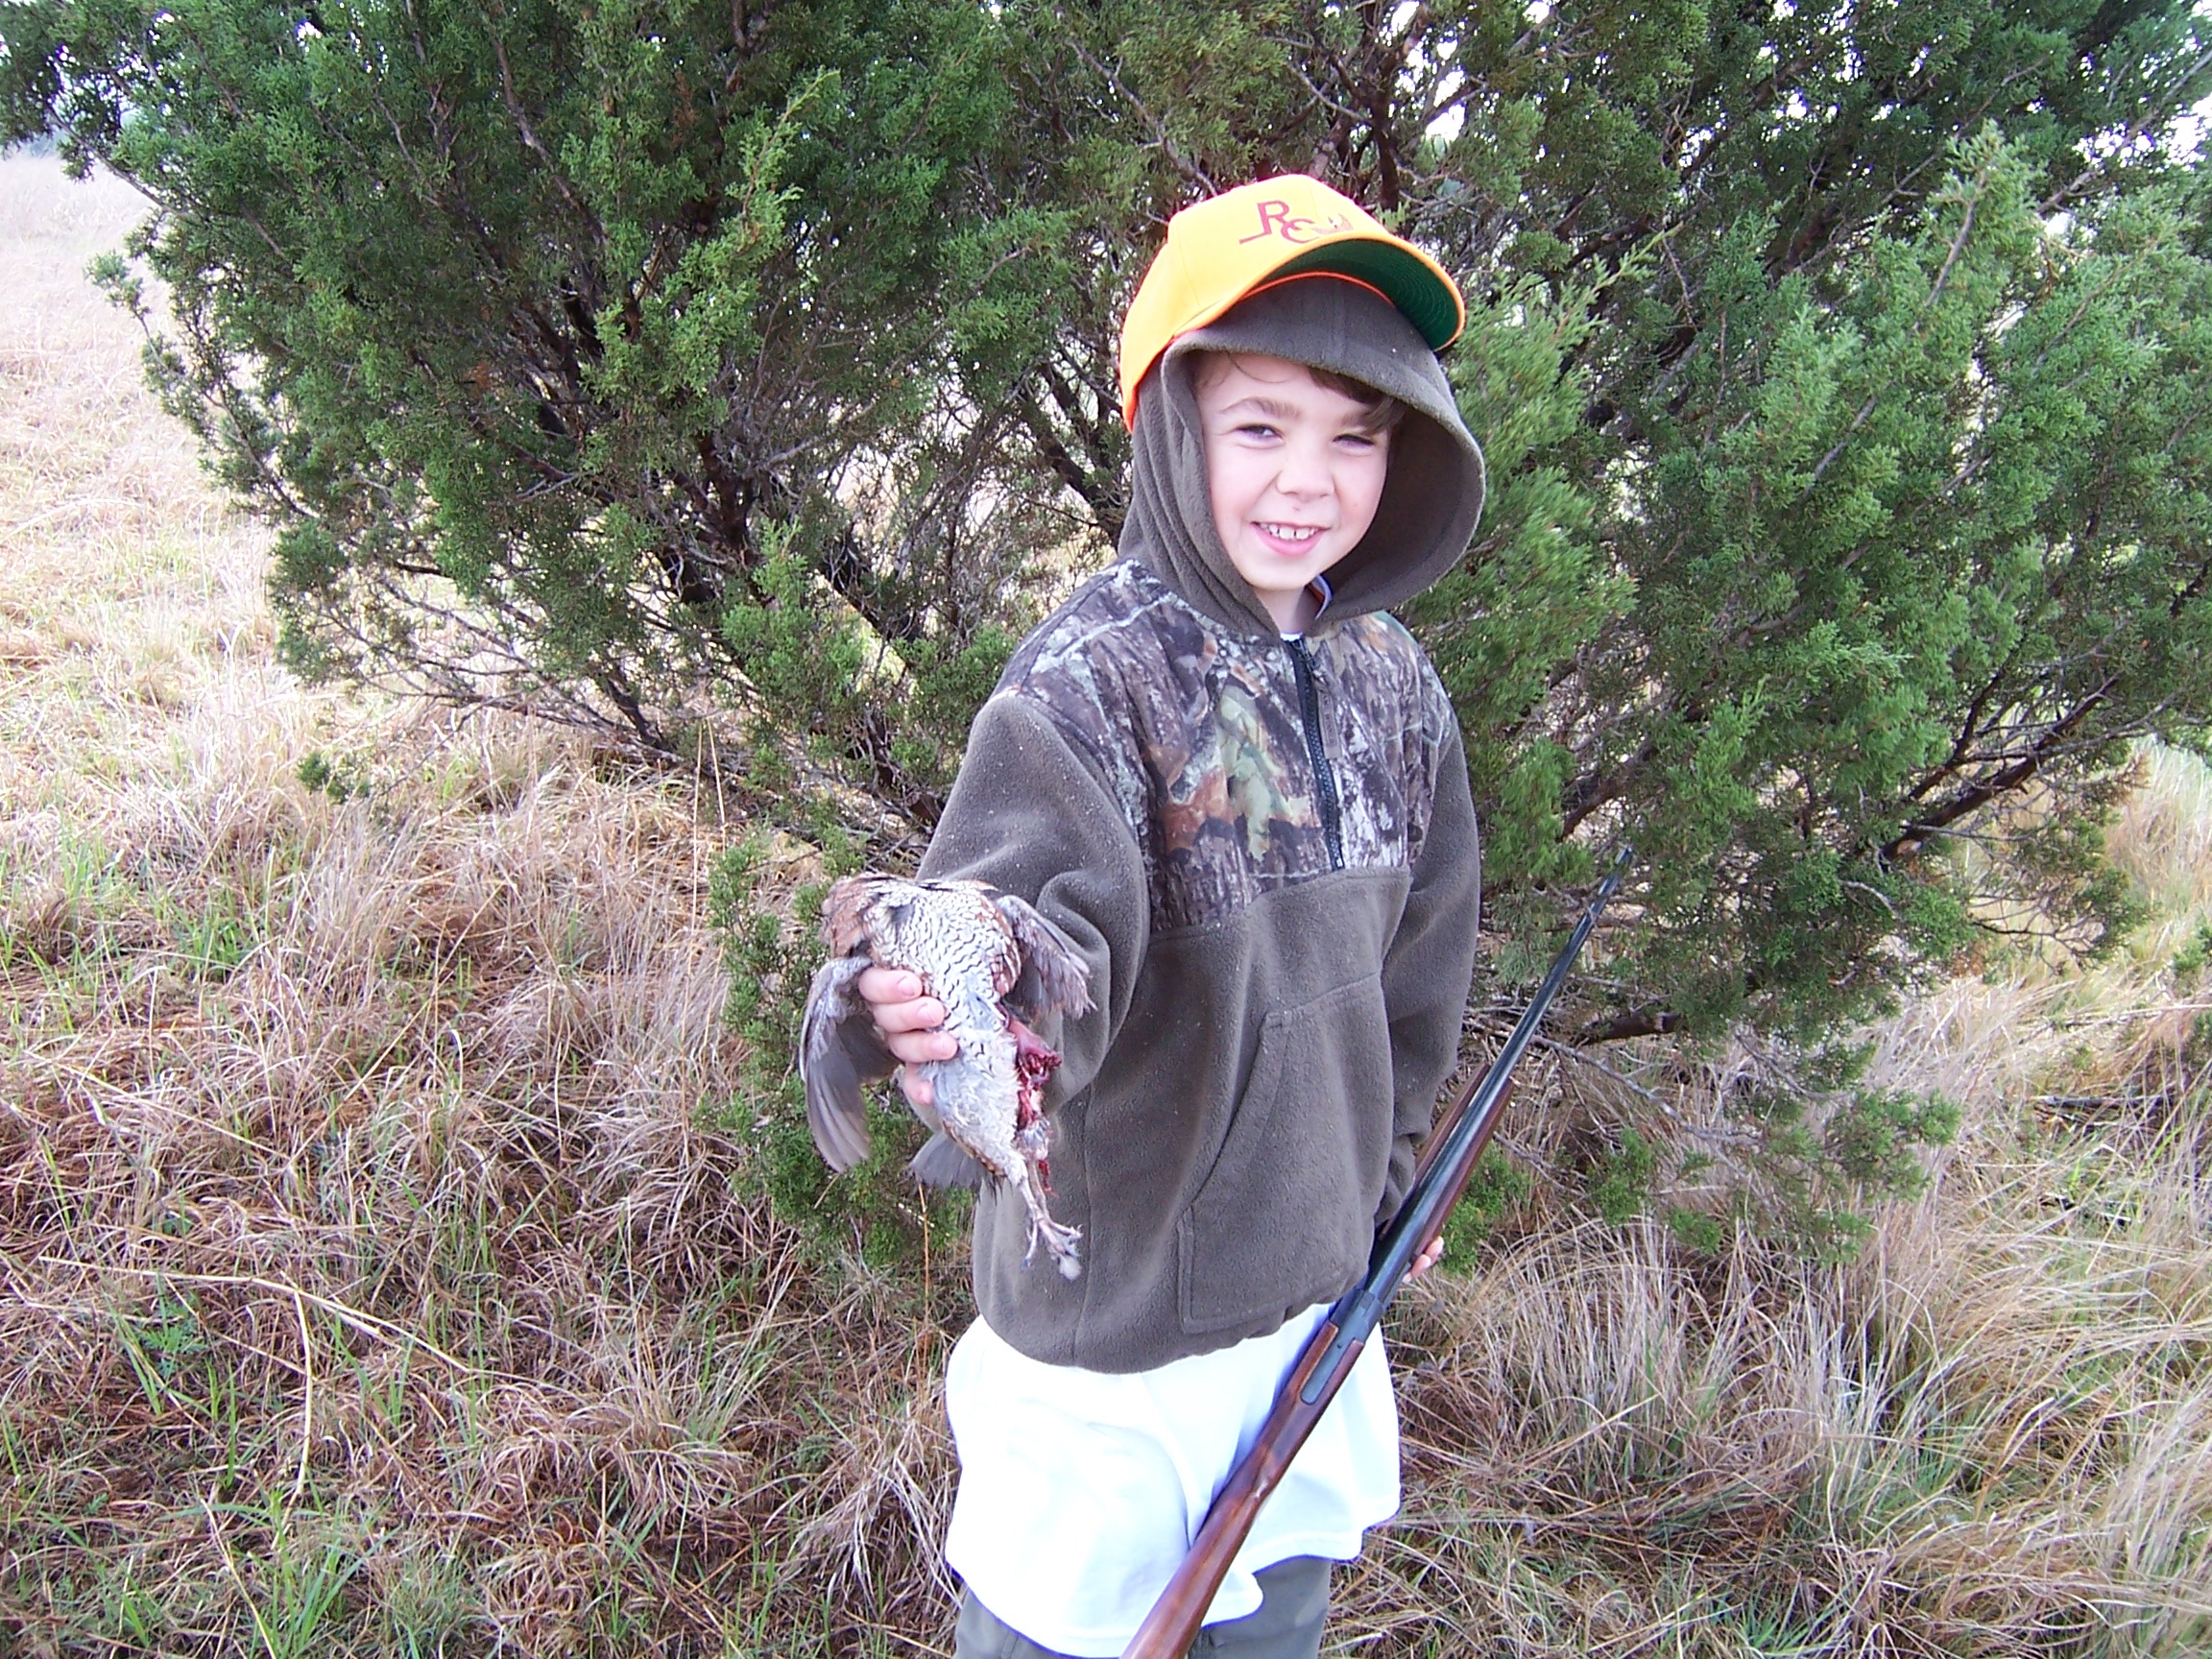 David shot a quail